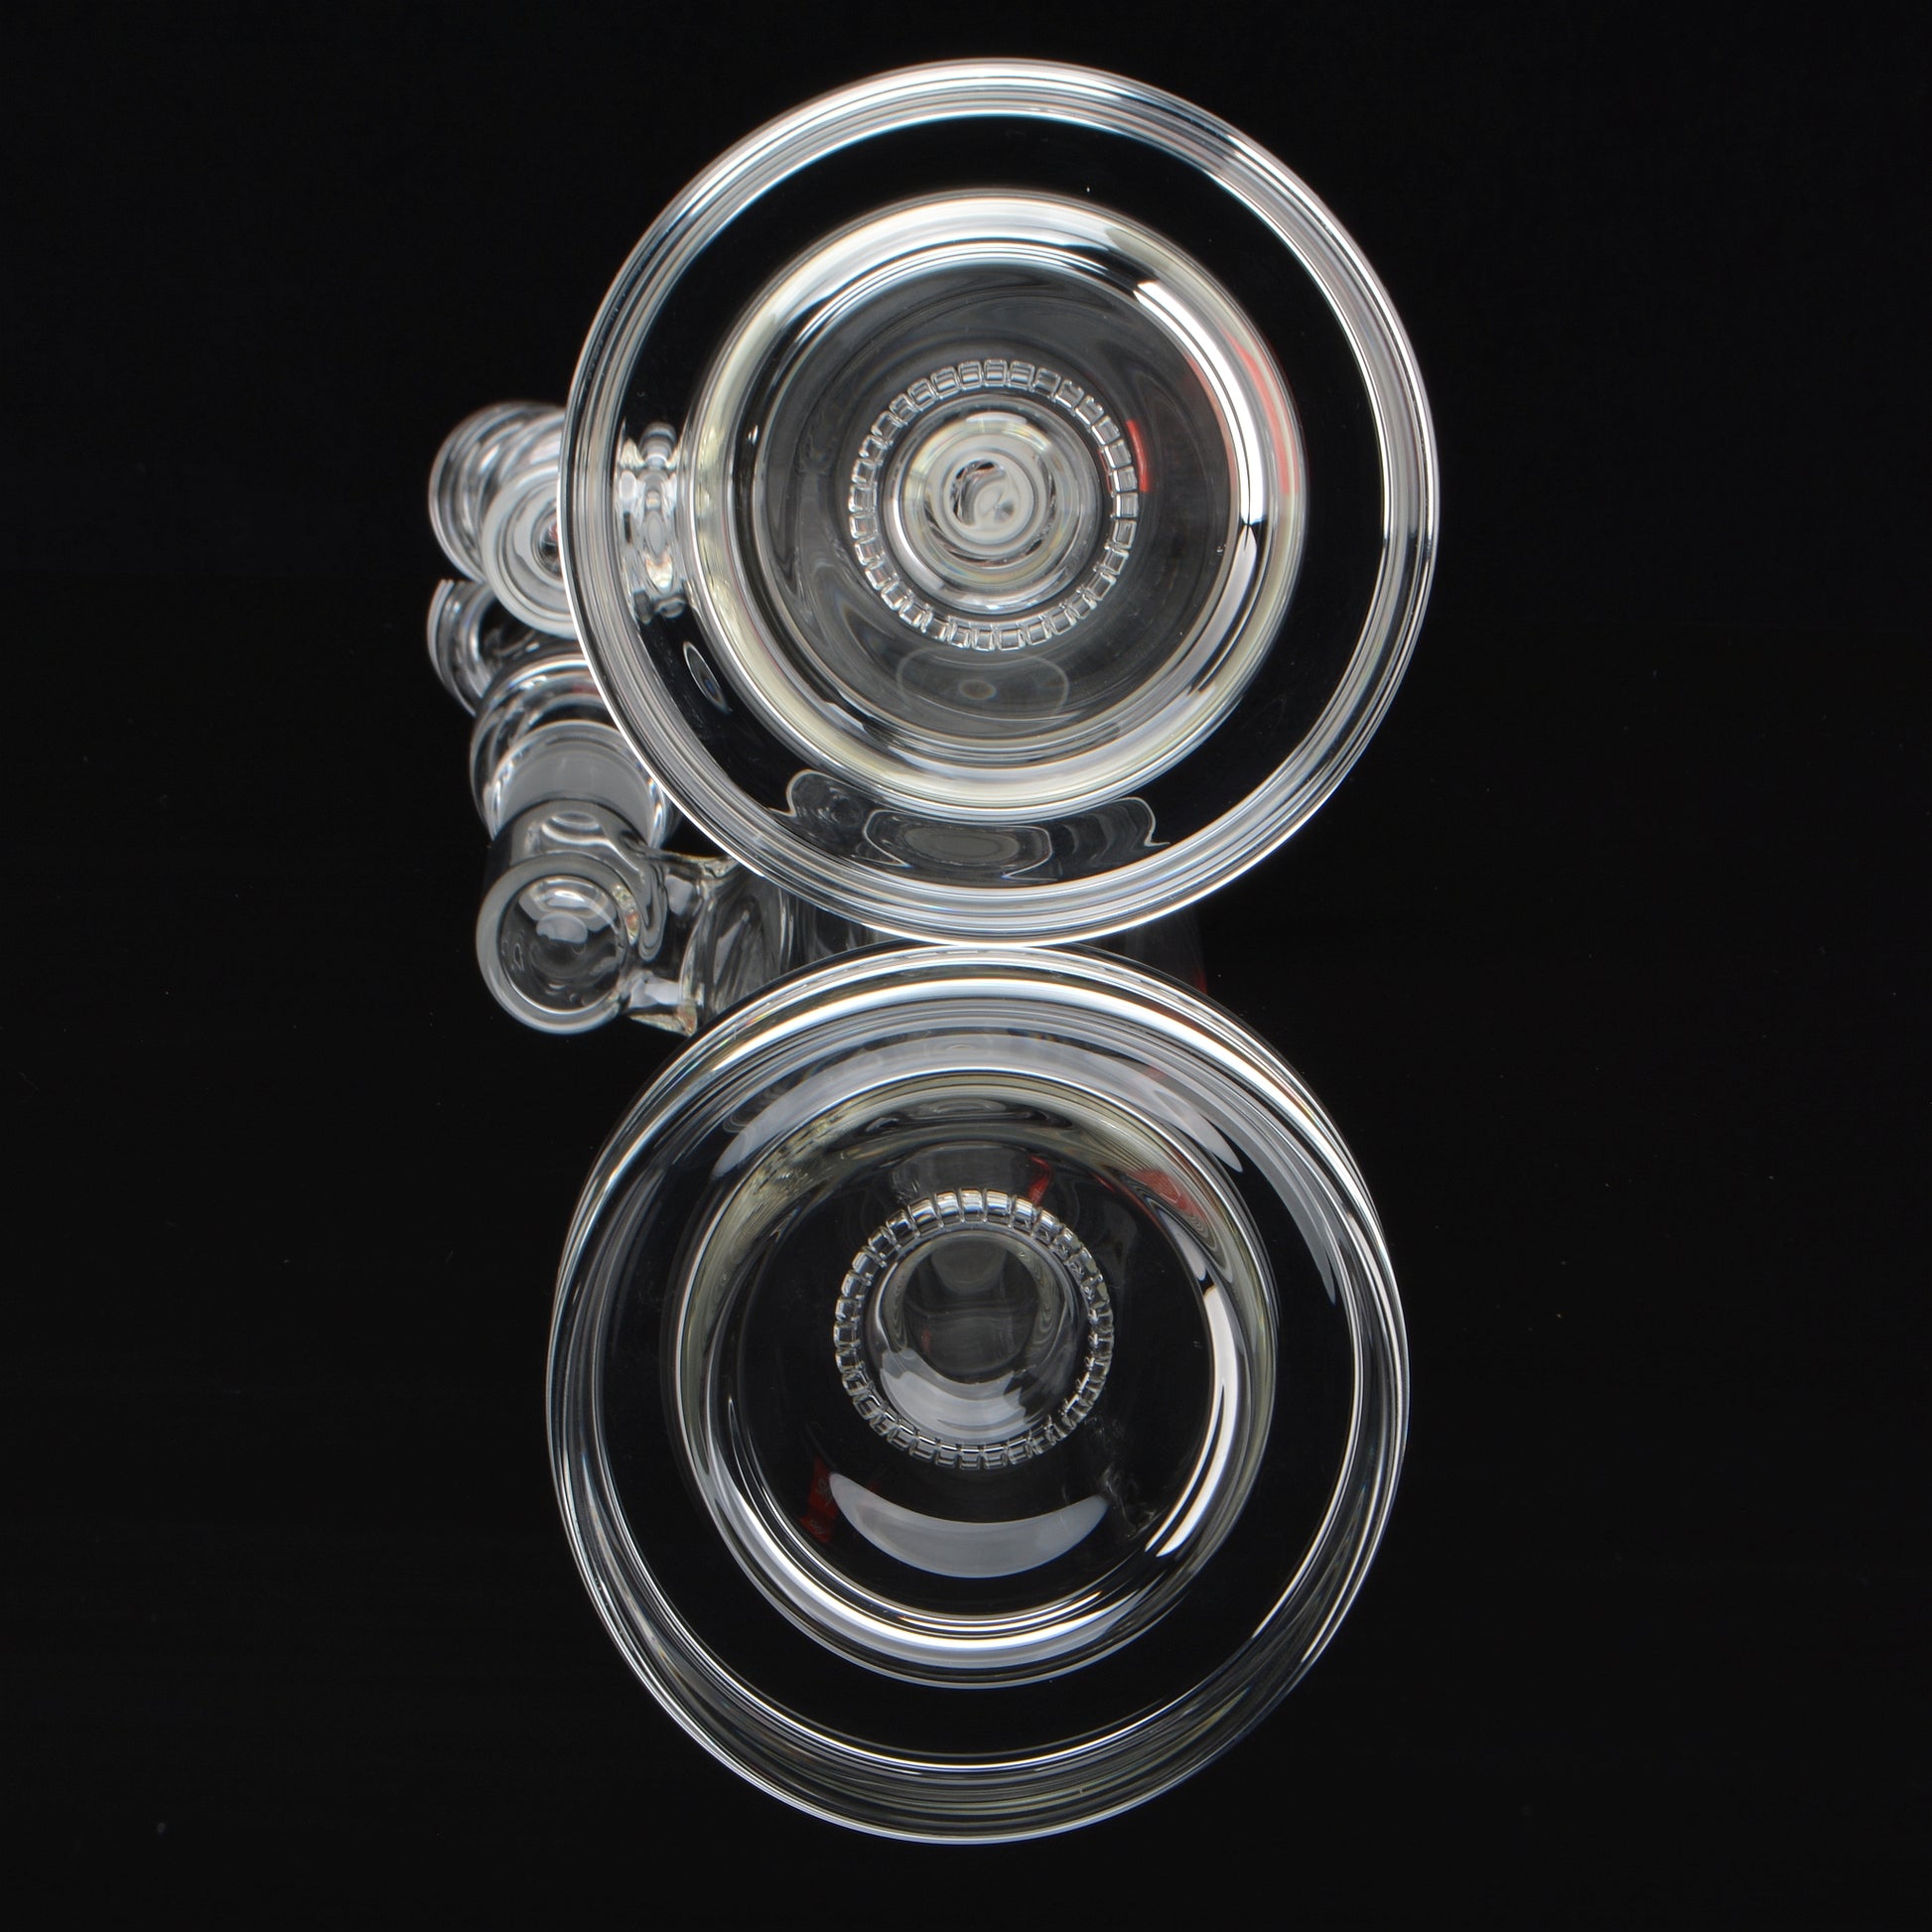 Shimmering Bubble Bracelet - Organic Glass - Lightweight - ApolloBox